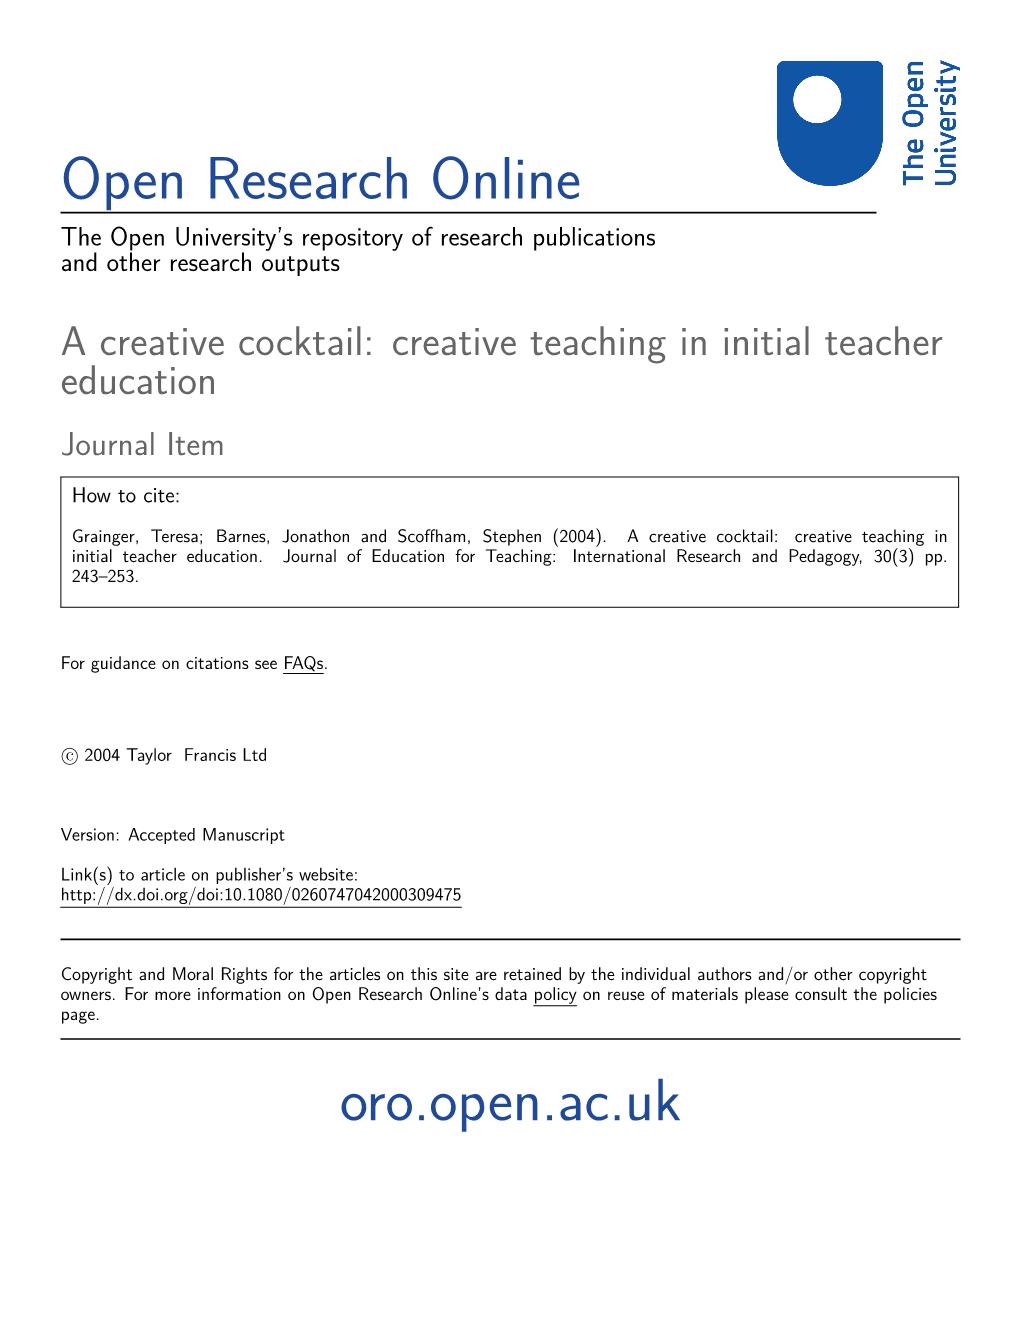 Creative Teaching in Initial Teacher Education Journal Item